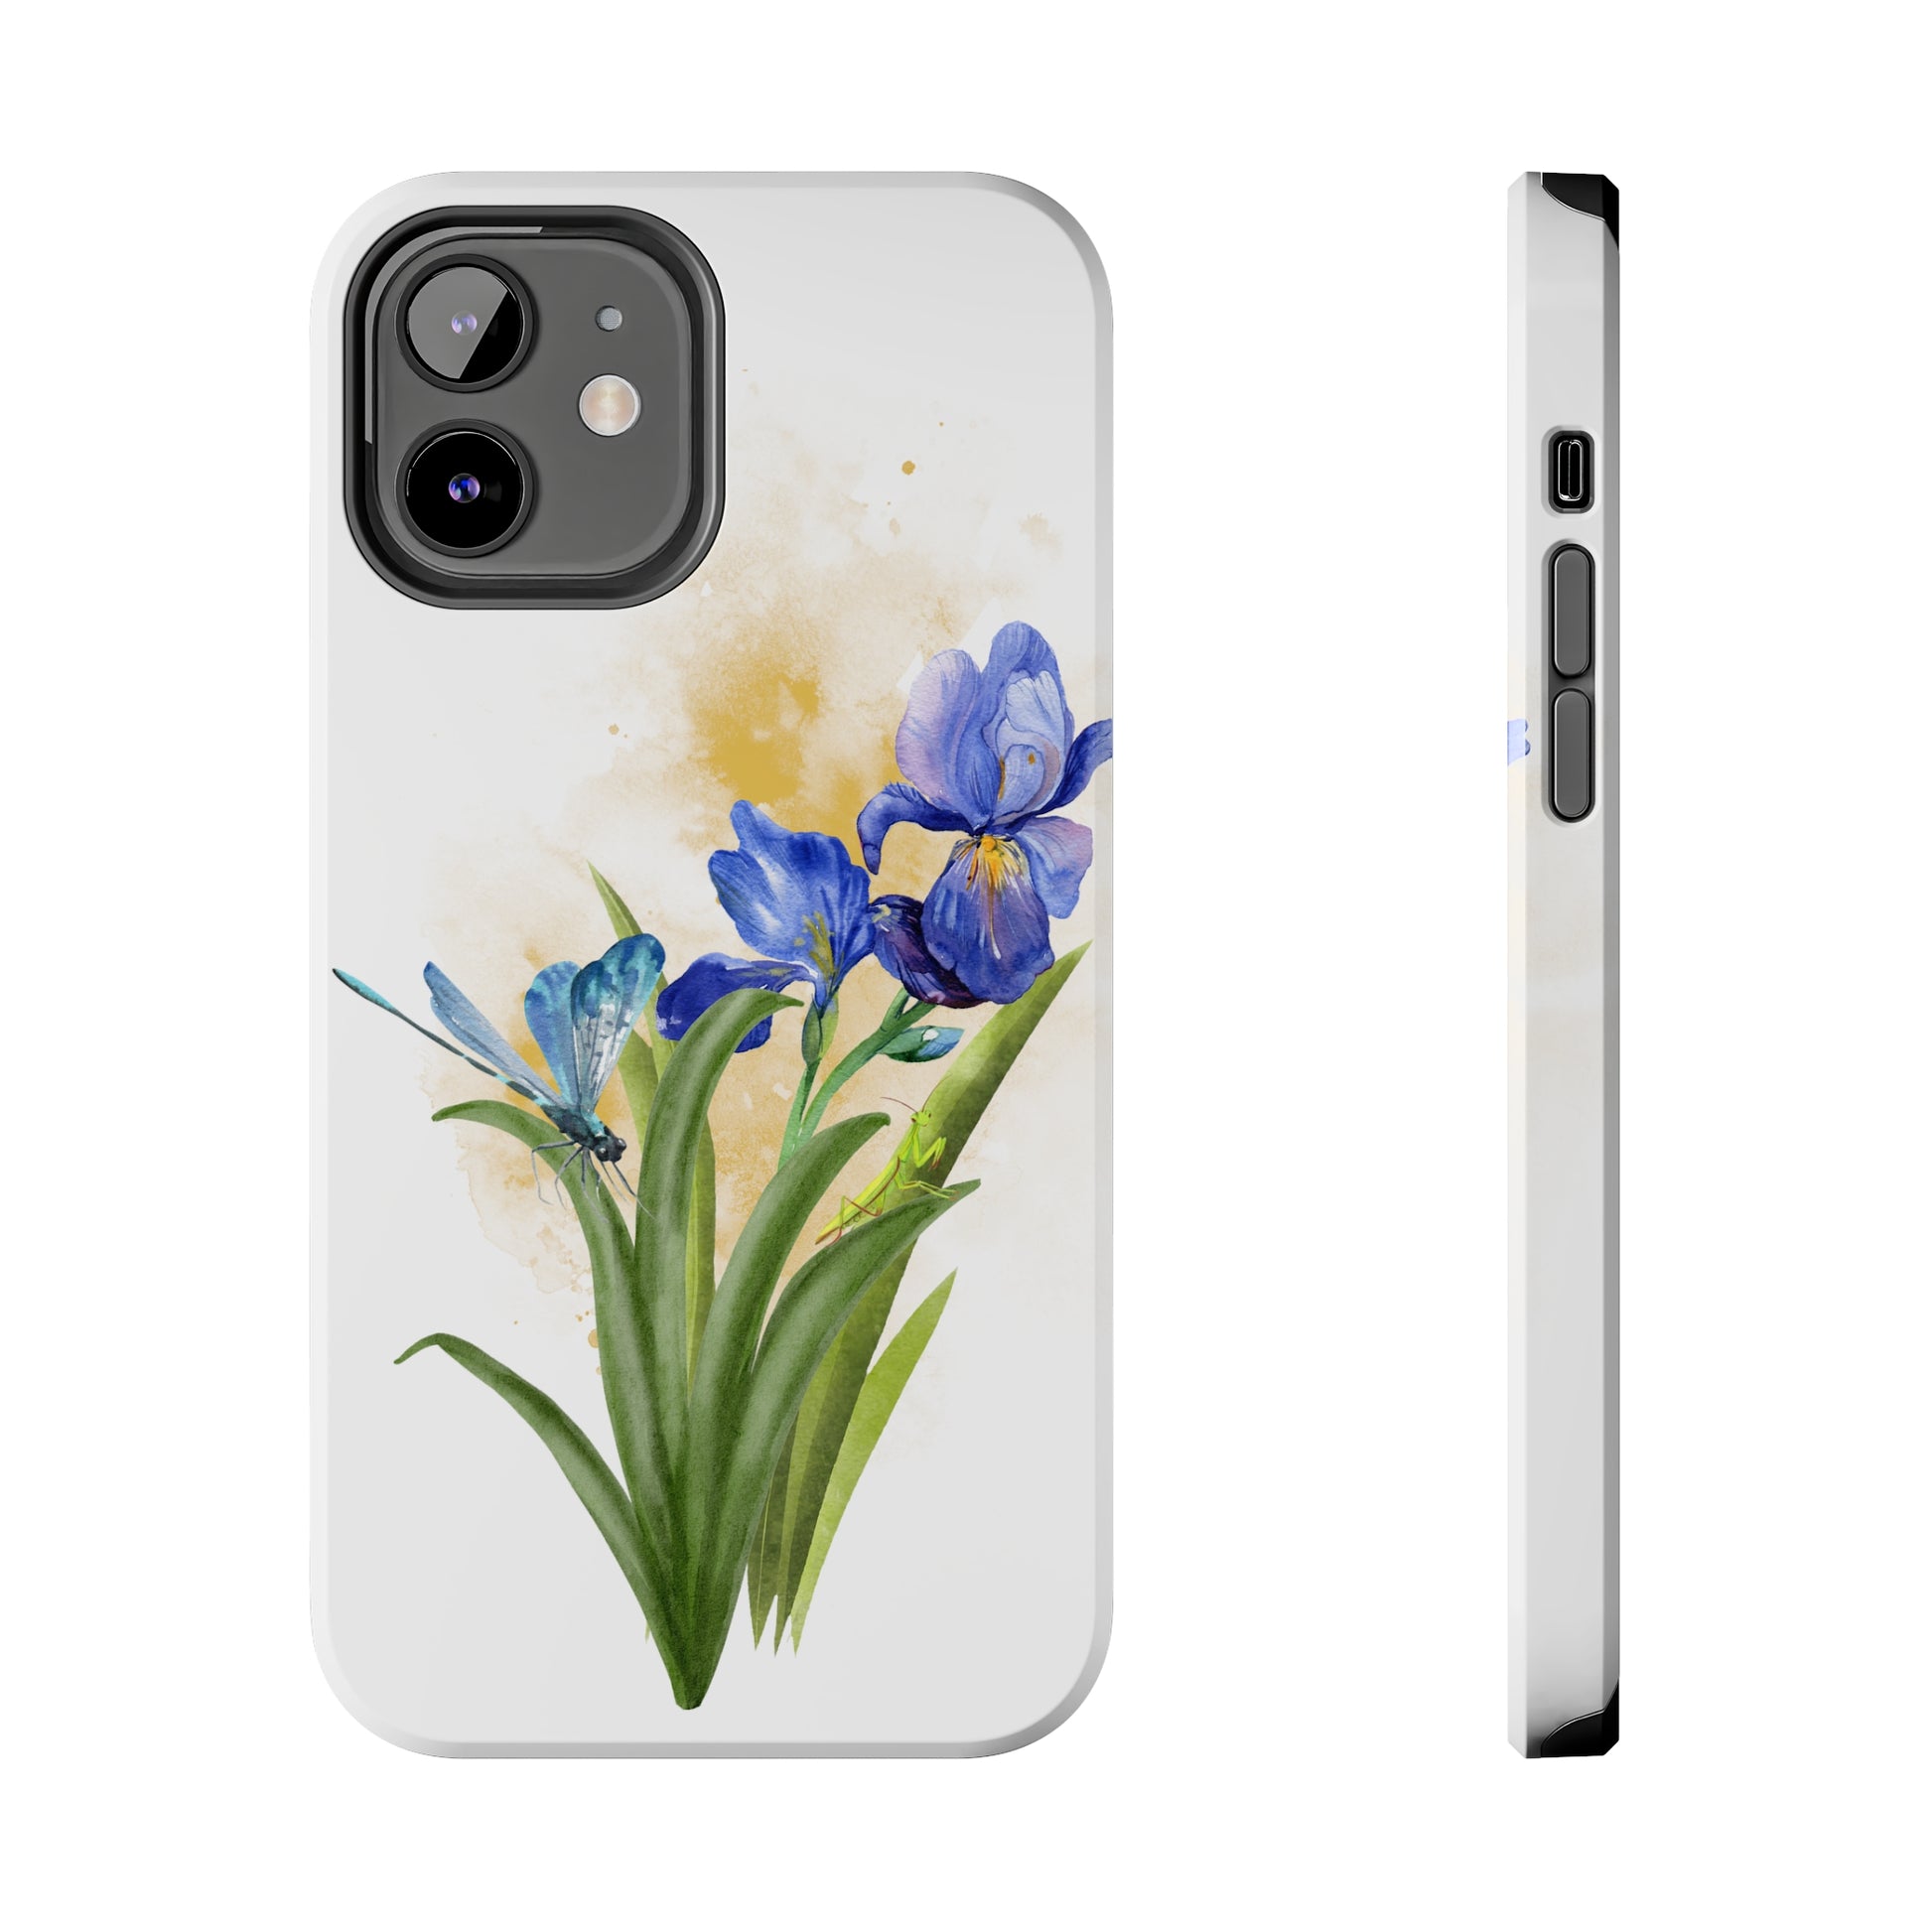 Iris Flower Dragonfly Custom Printed iPhone case by TheGlassyLass.com